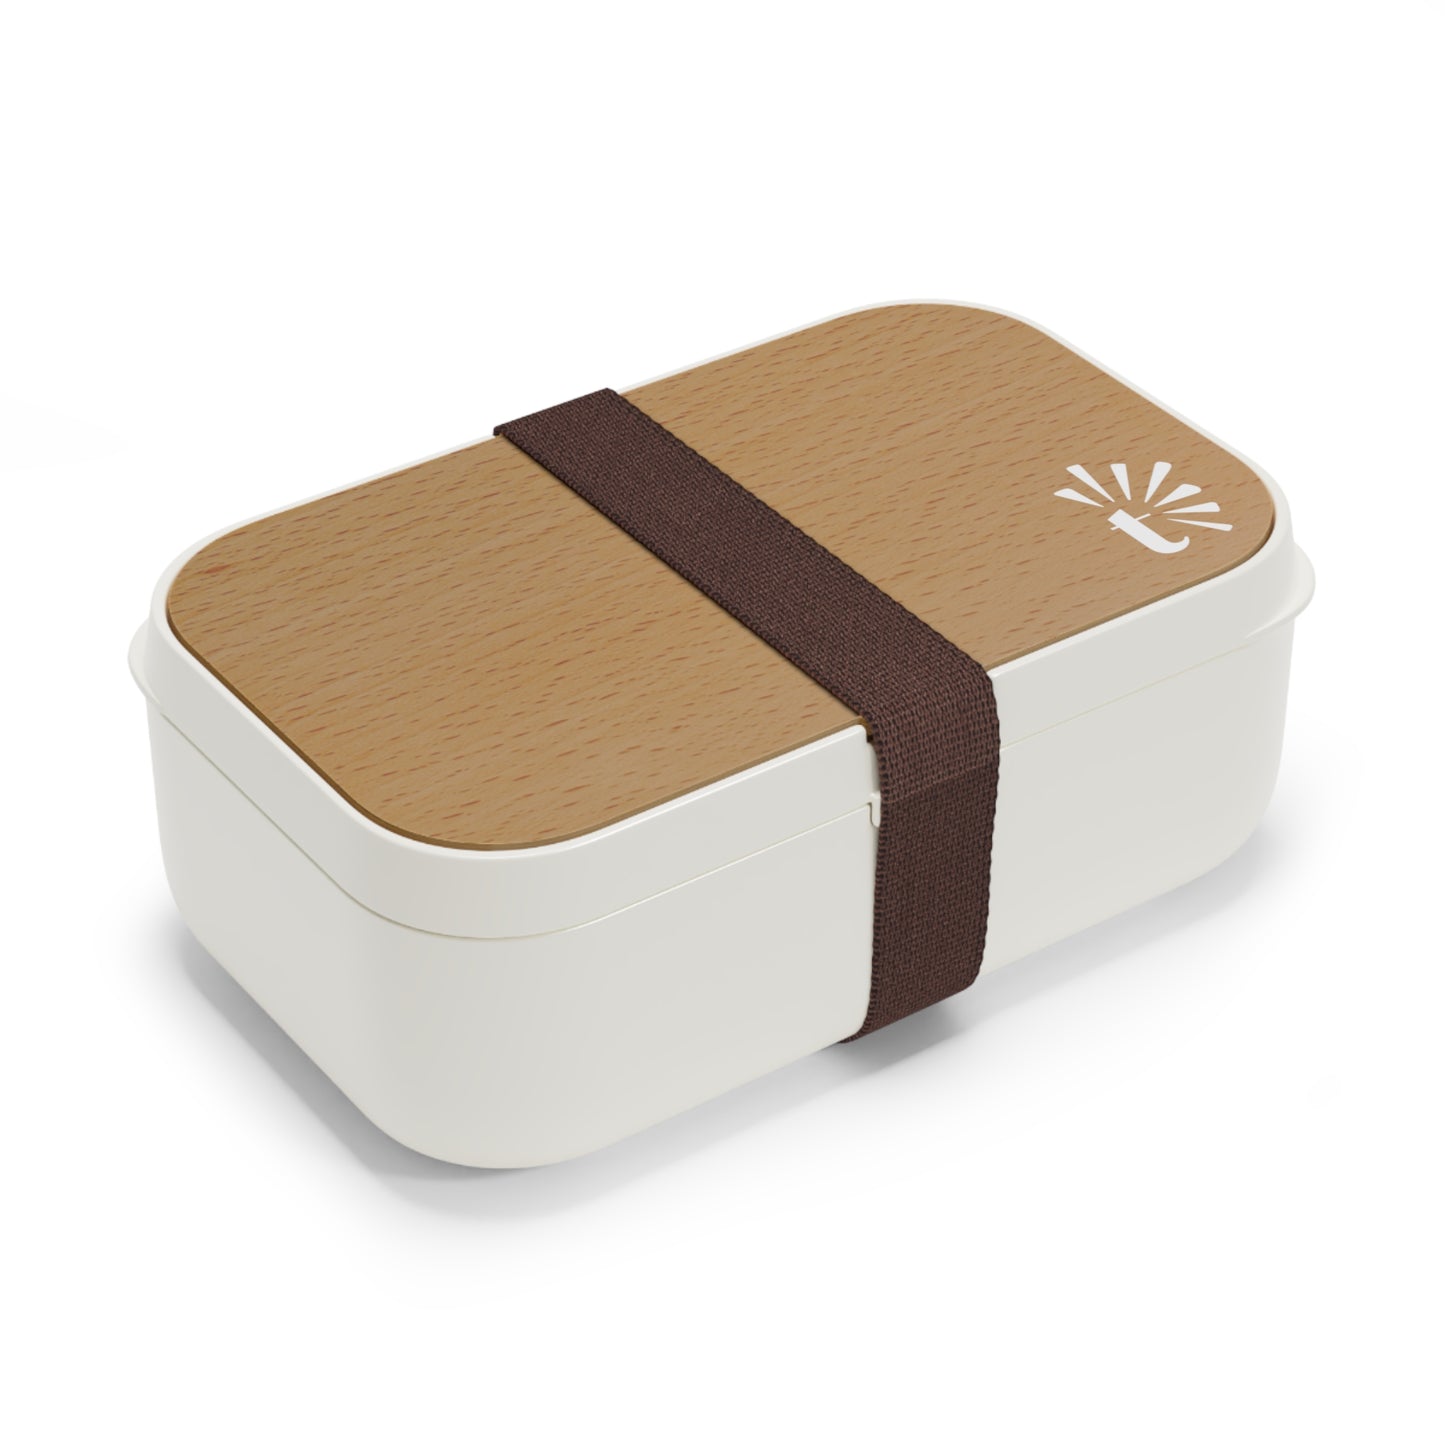 Bento Lunch Box (T Logo)